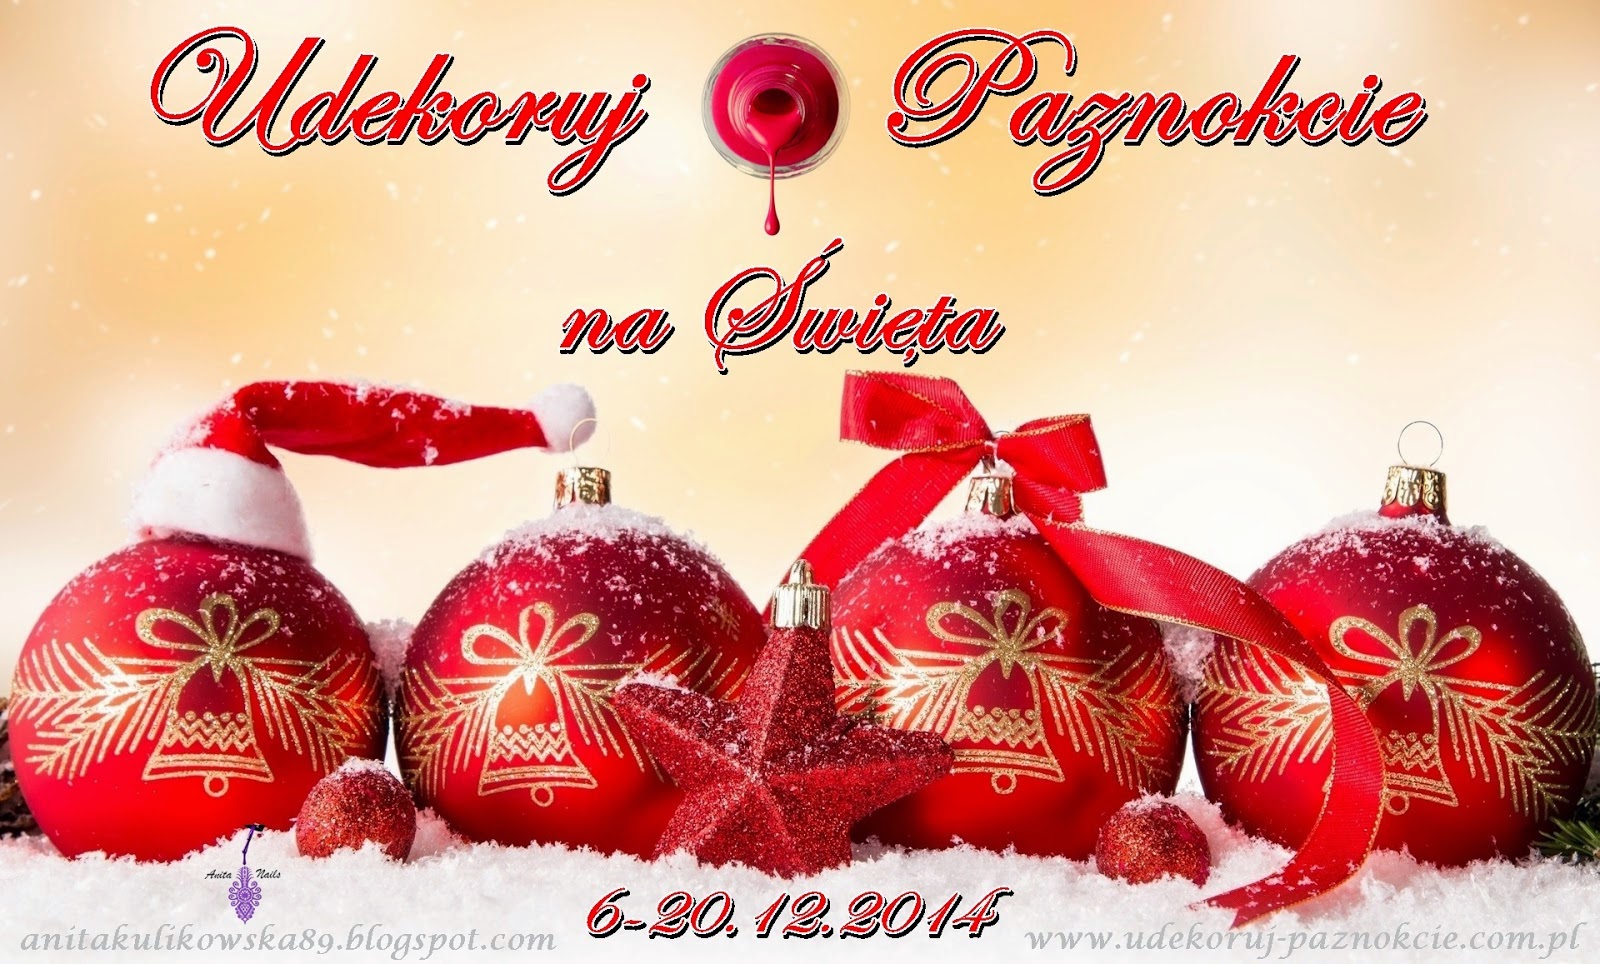  http://anitakulikowska89.blogspot.com/2014/12/konkurs-udekoruj-paznokcie-na-swieta.html